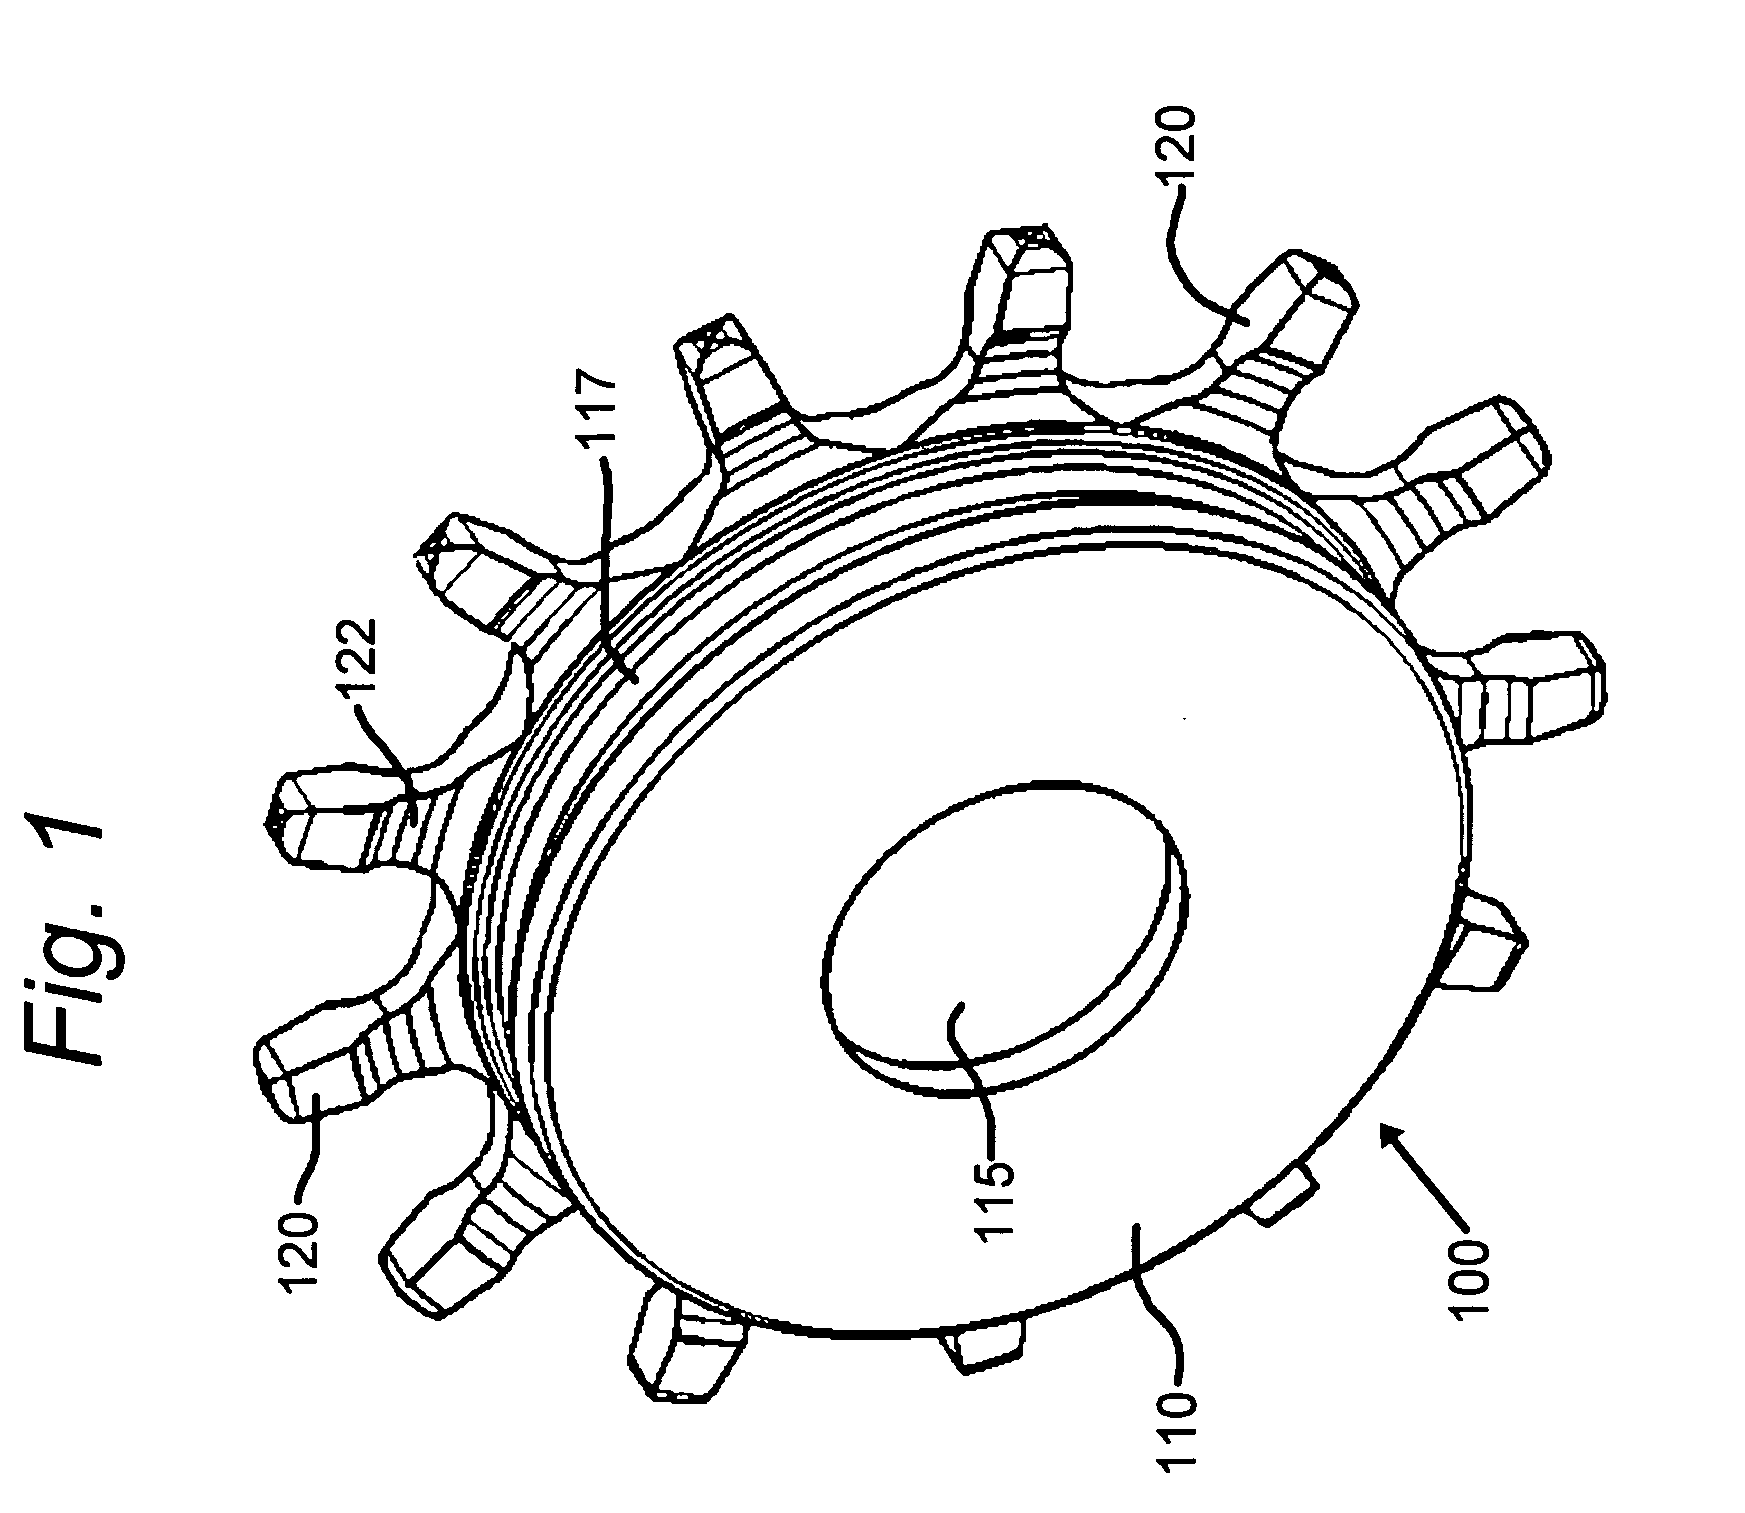 Composite brake disc